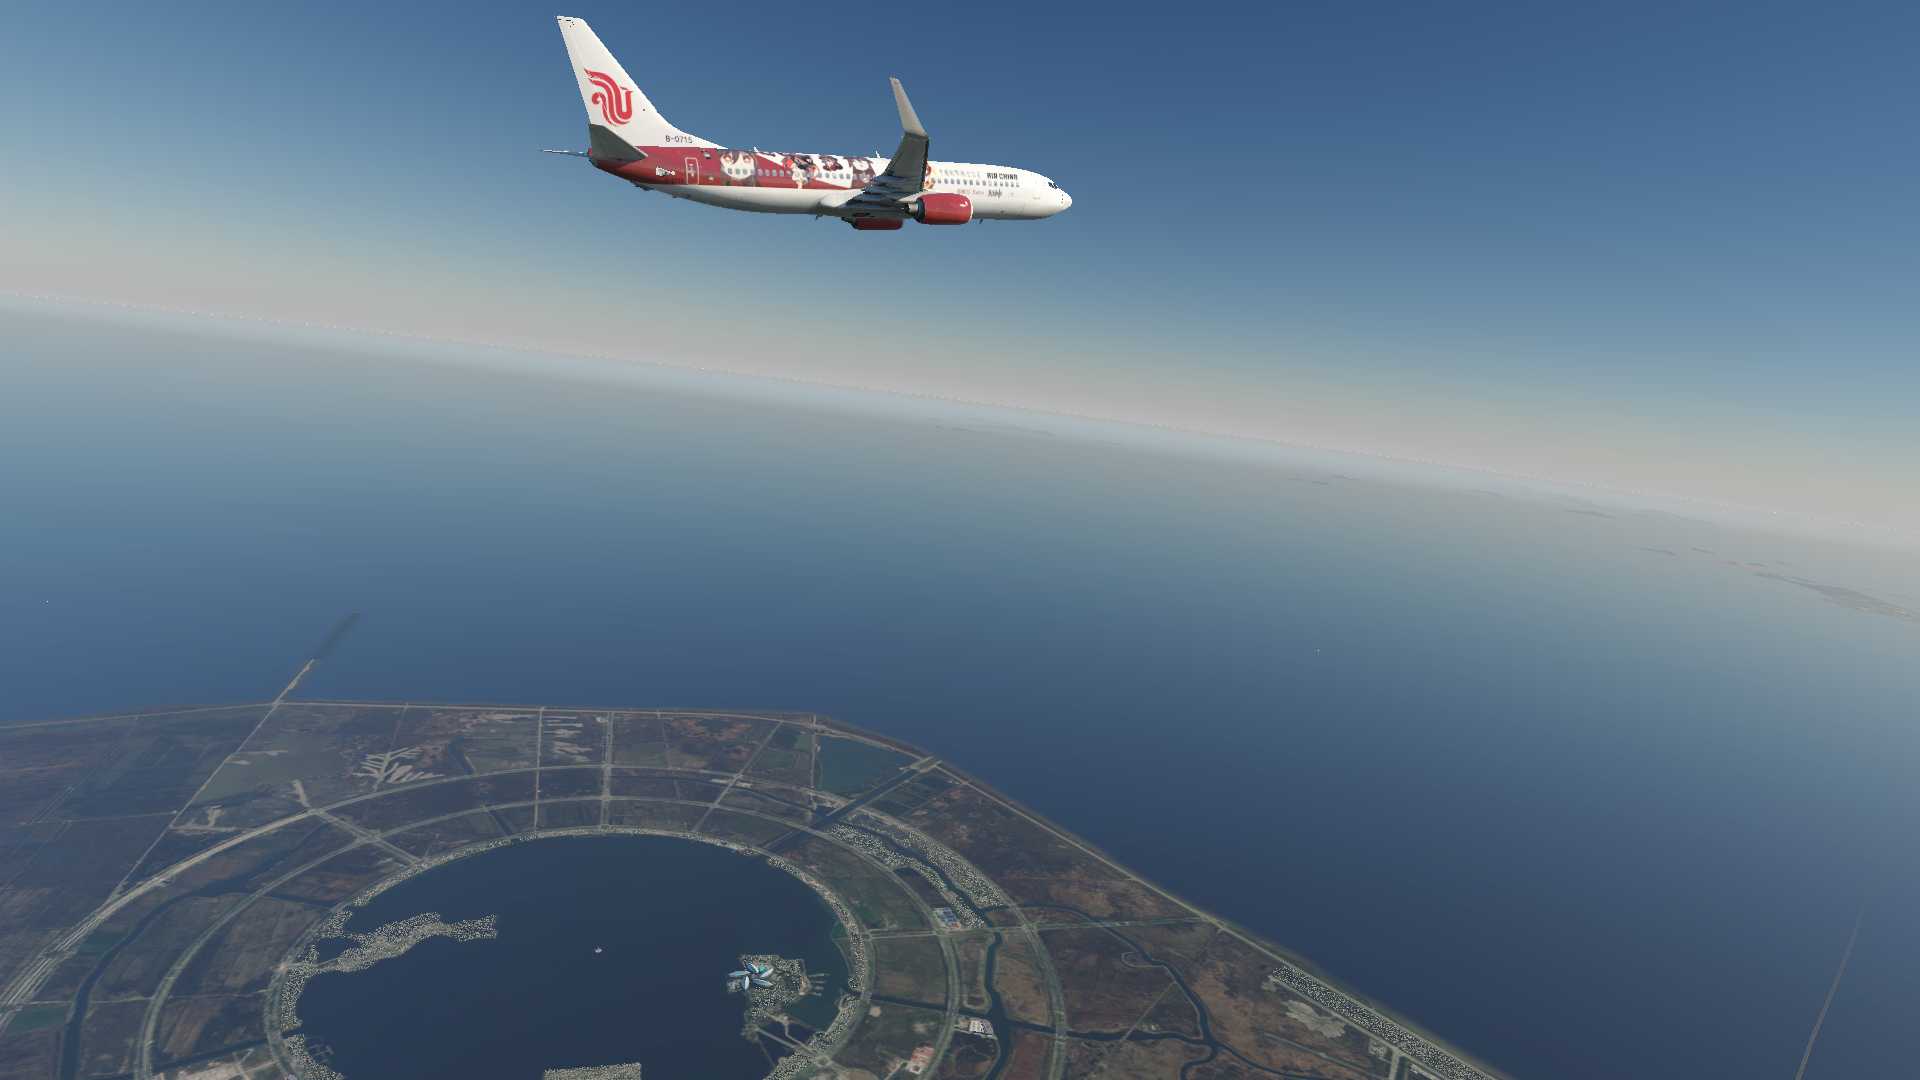 【X-Plane 11】航线上的风景-7558 